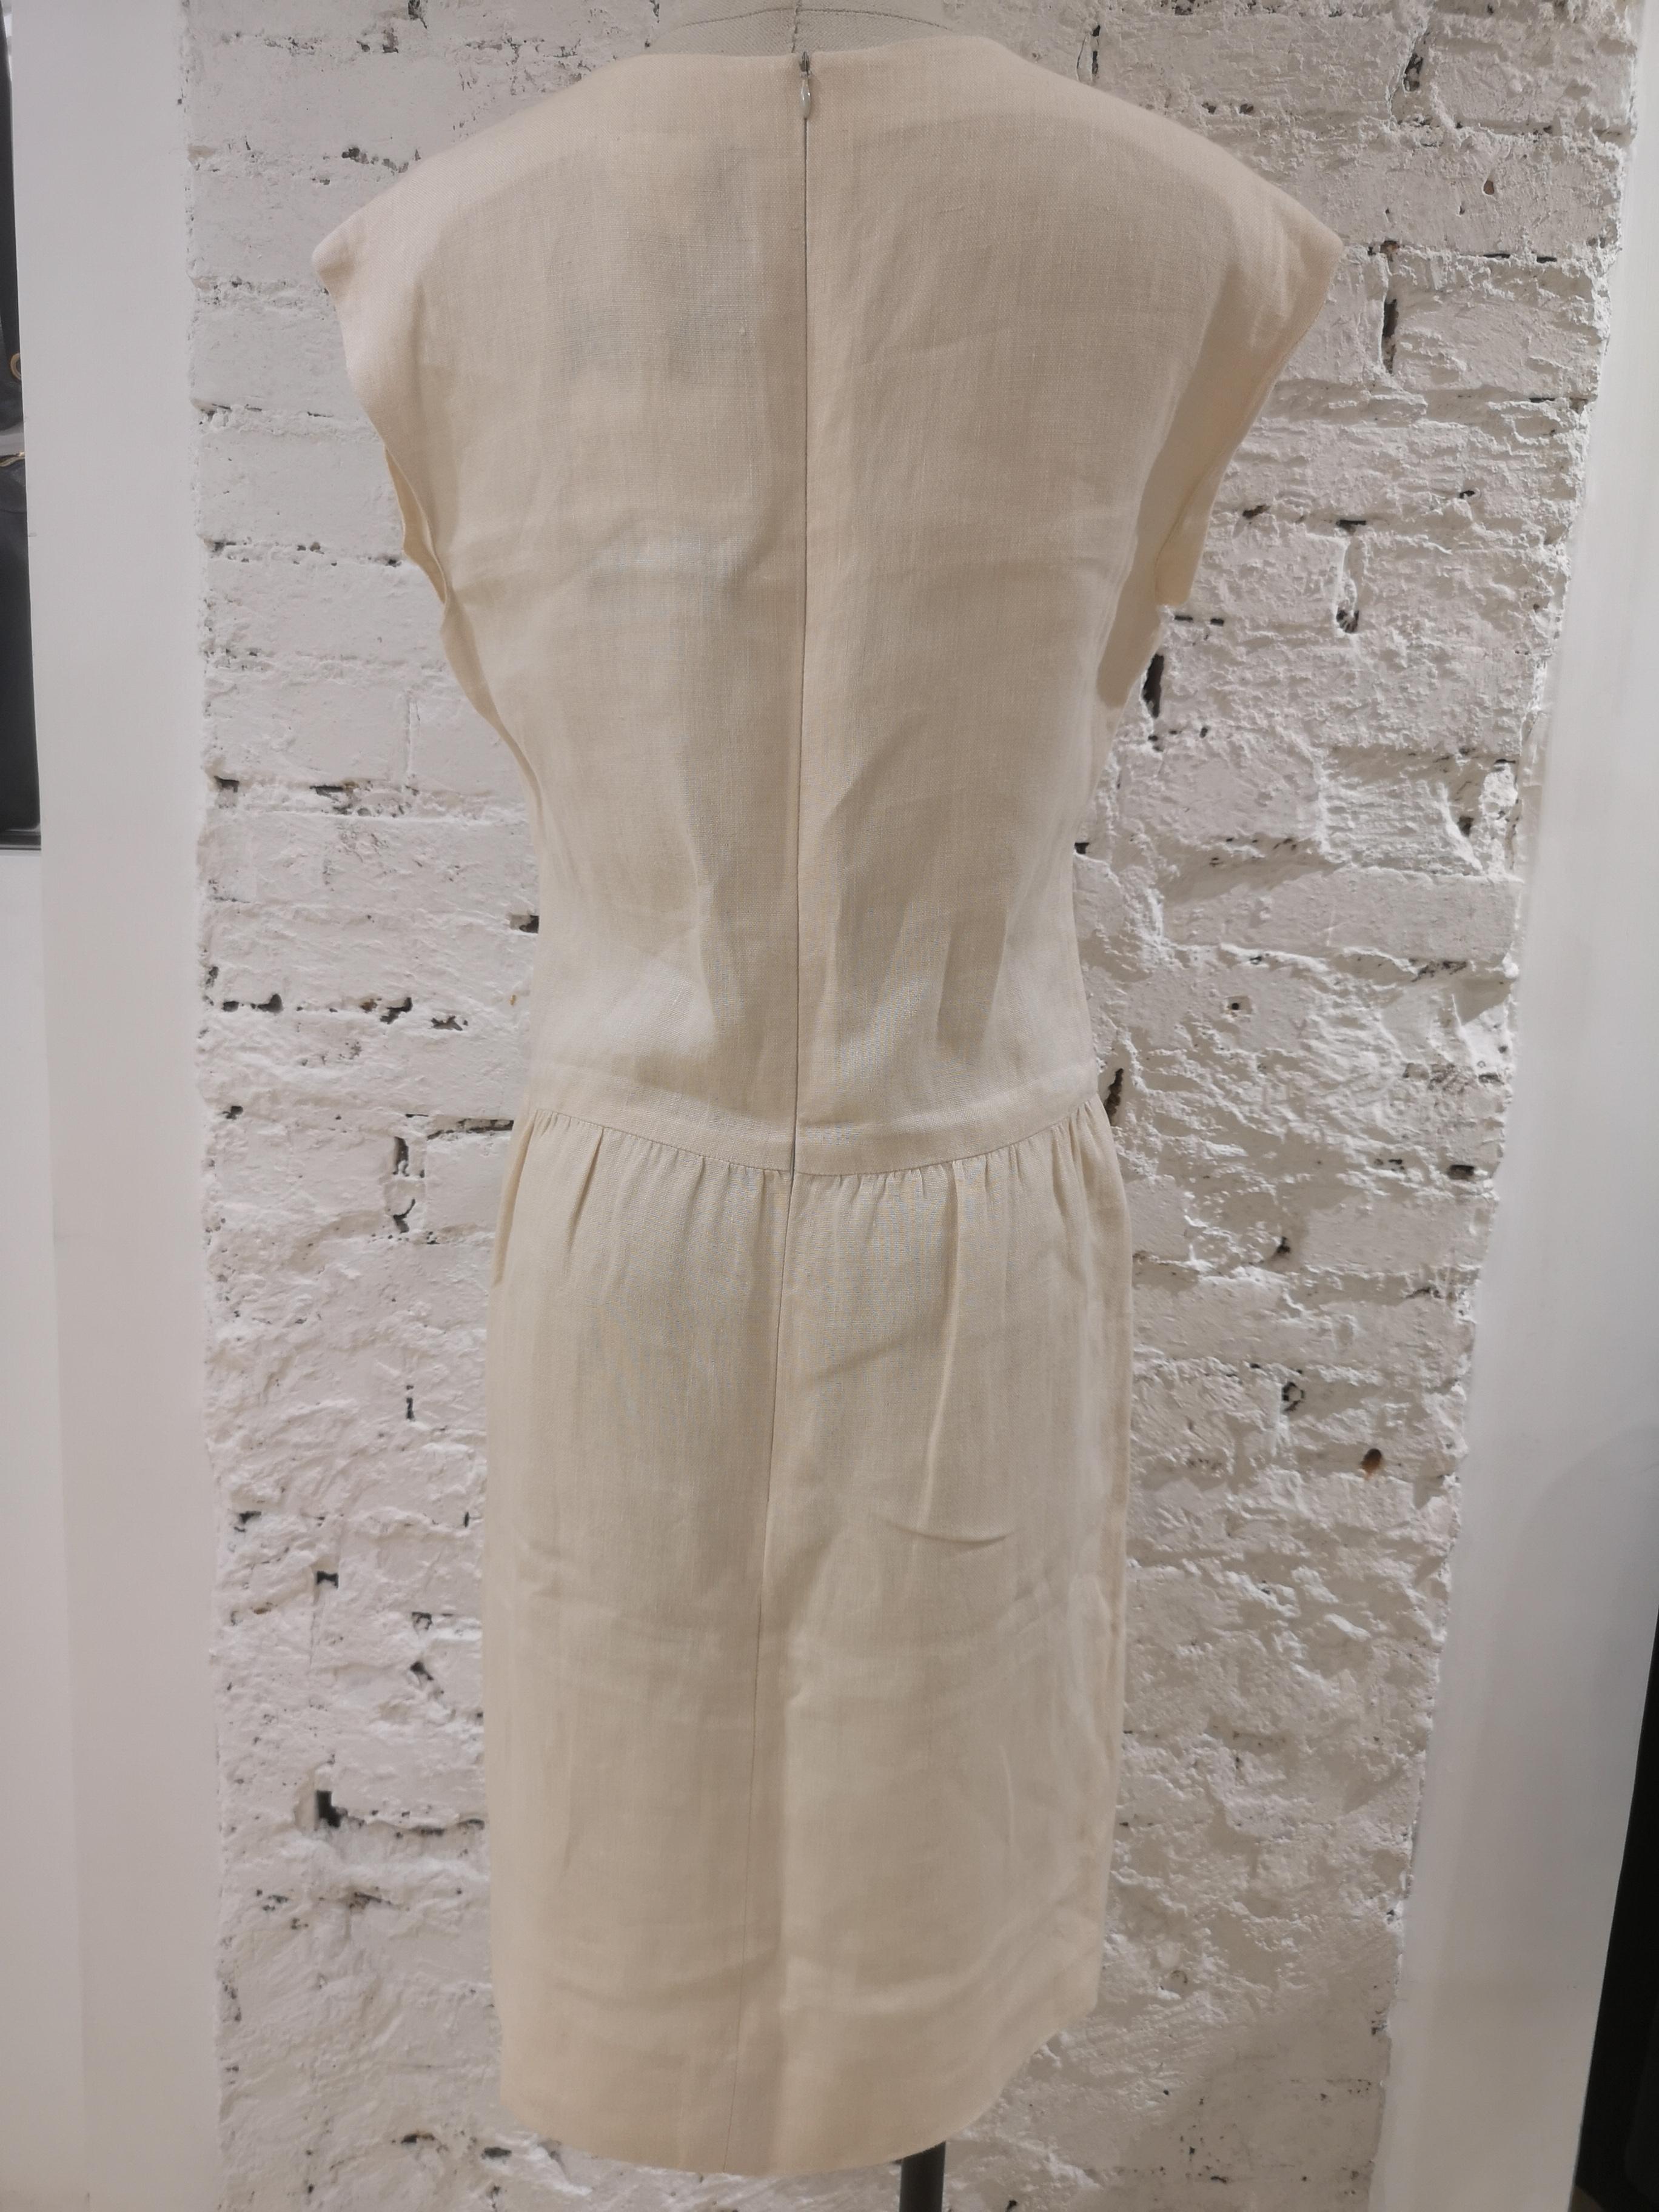 Chanel beige linen dress
embellished with cc buttons
Size: 42 fr
waist 44 cm
lenght 99 cm
shoulders 50 cm
